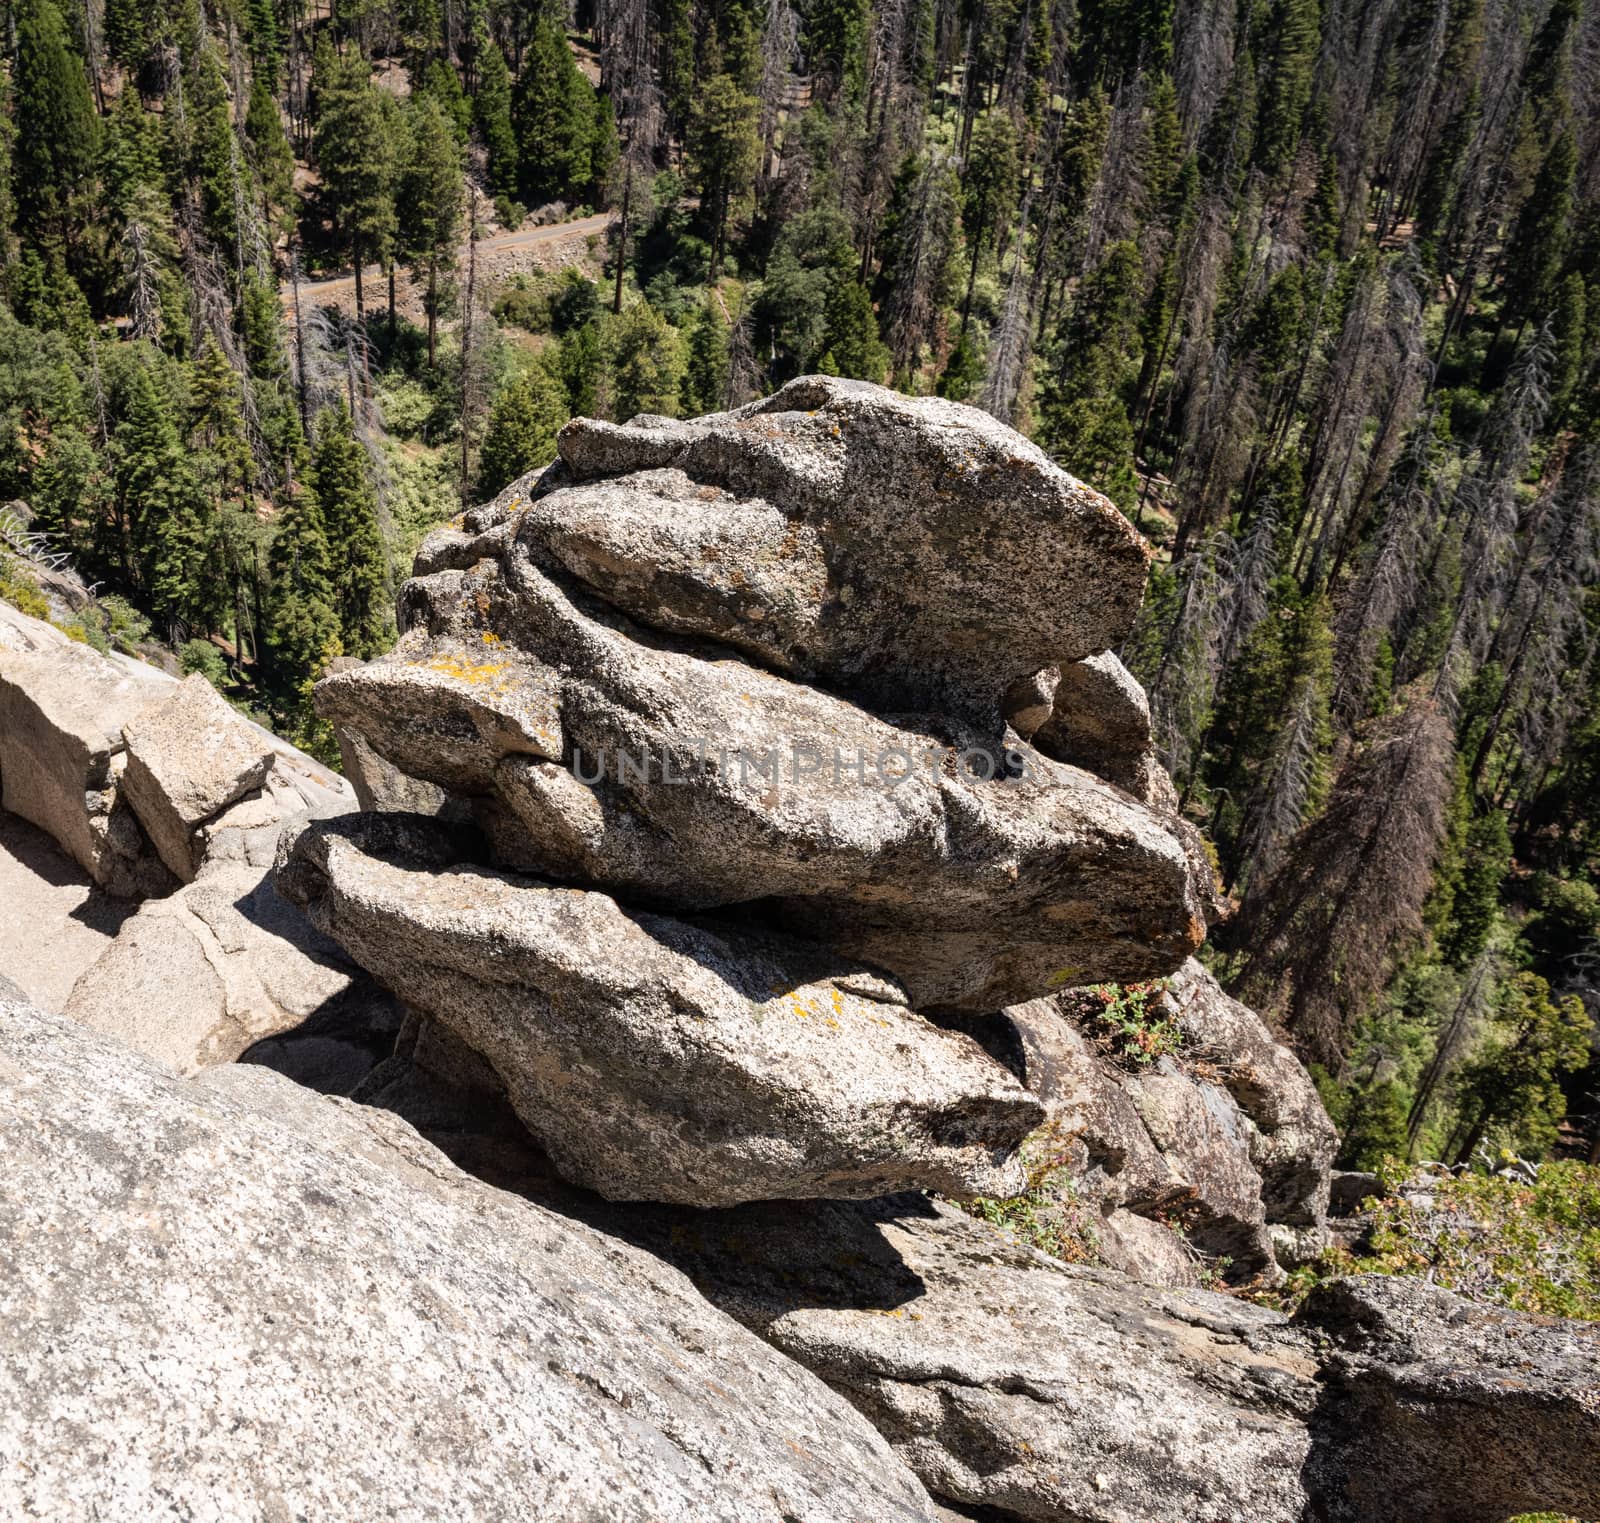 Granite boulder on Moro Rock in Sequoia National Park, California